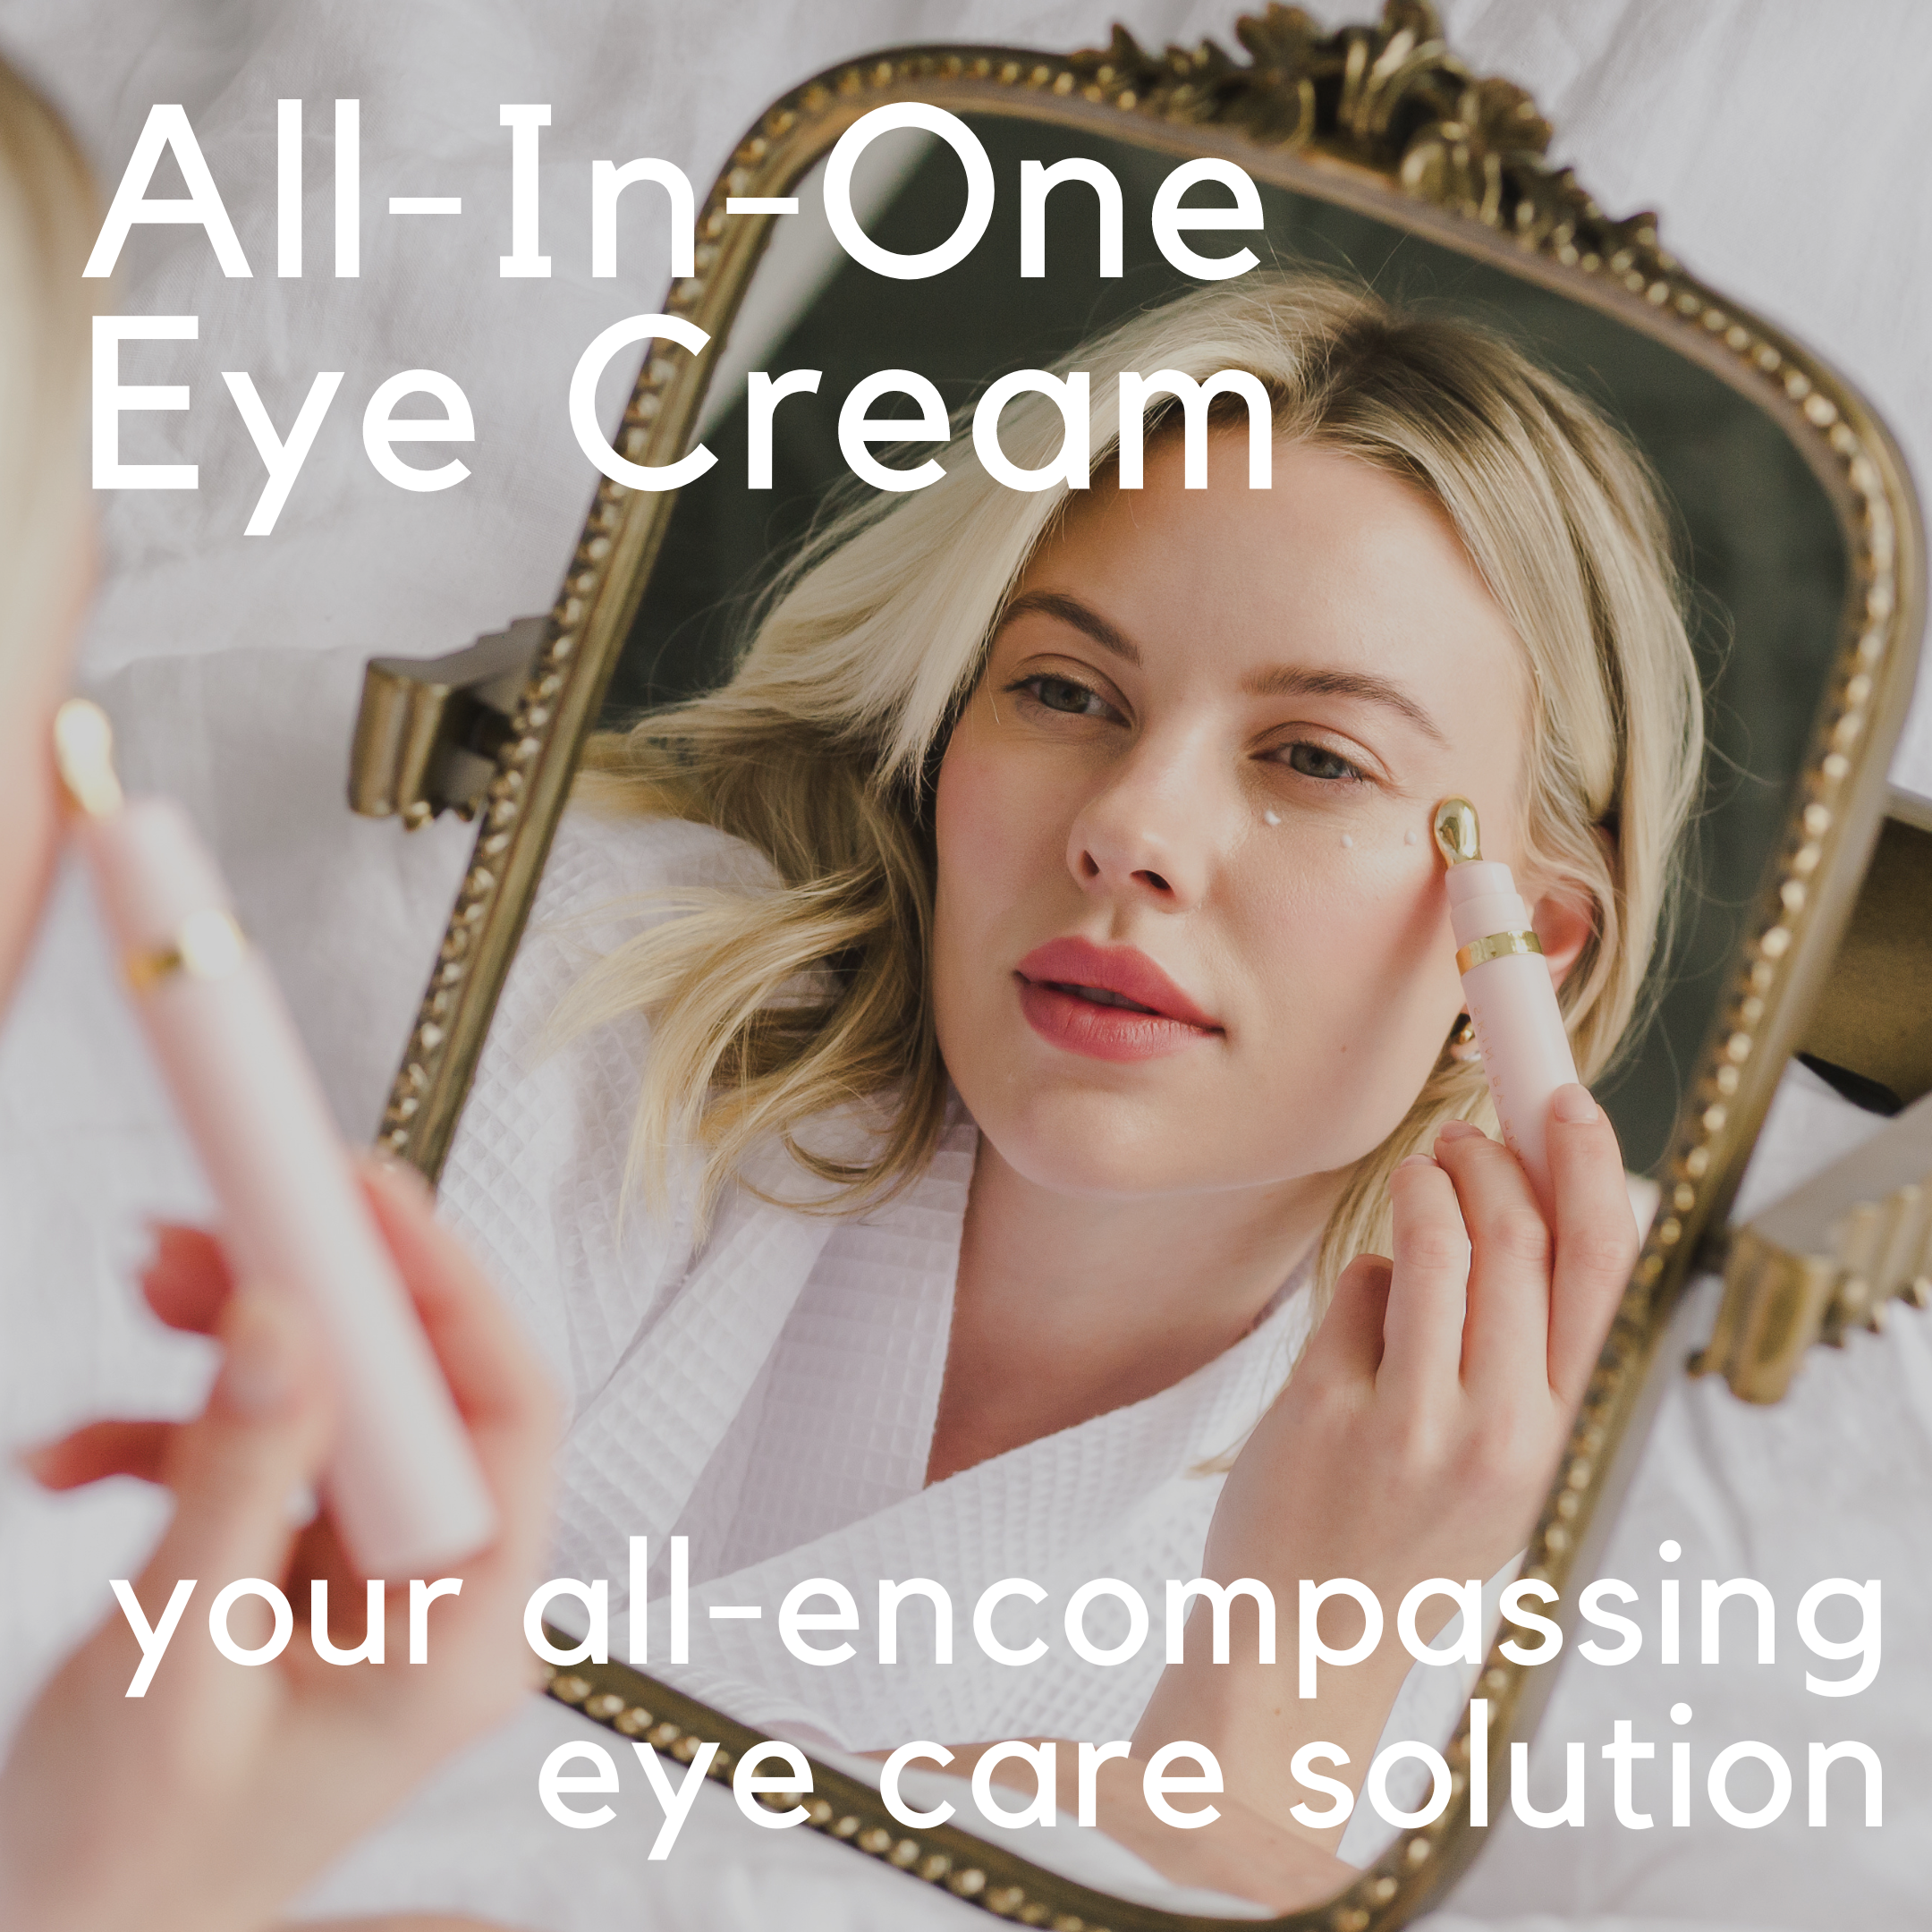 All-In-One Eye Cream